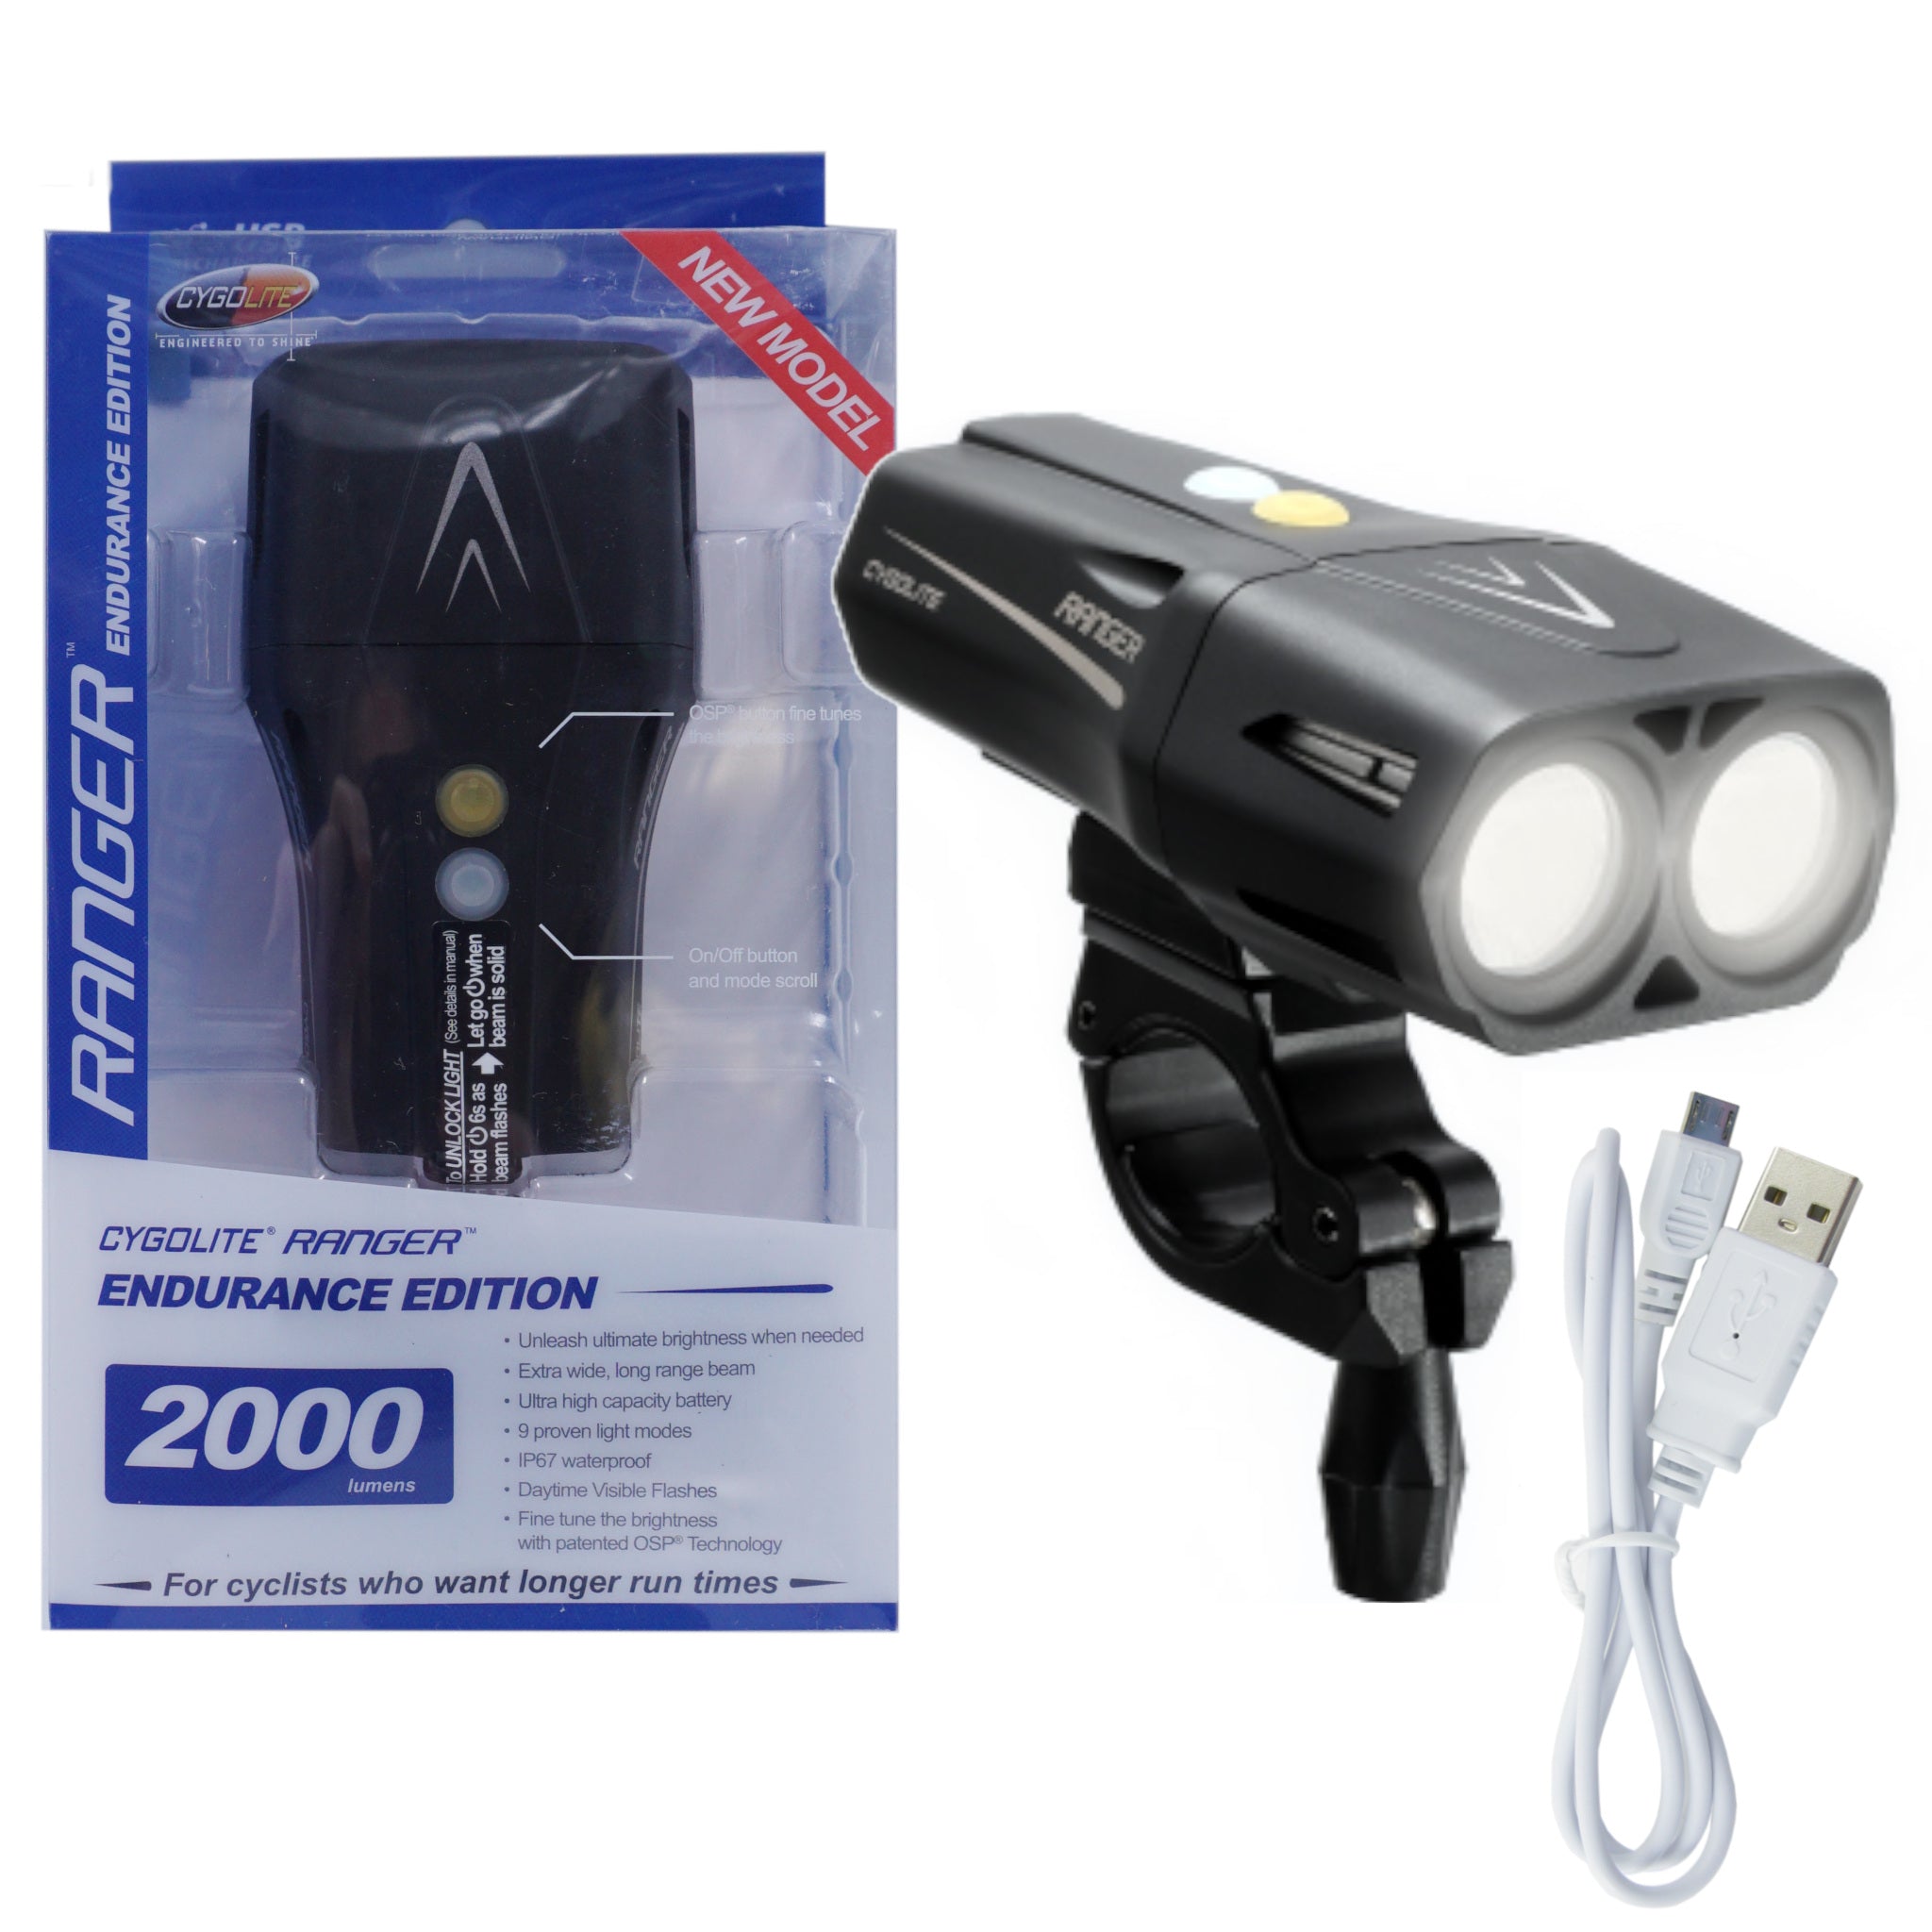 Cygolite Ranger 2000 LM Endurance Edition USB Headlight - The Bikesmiths